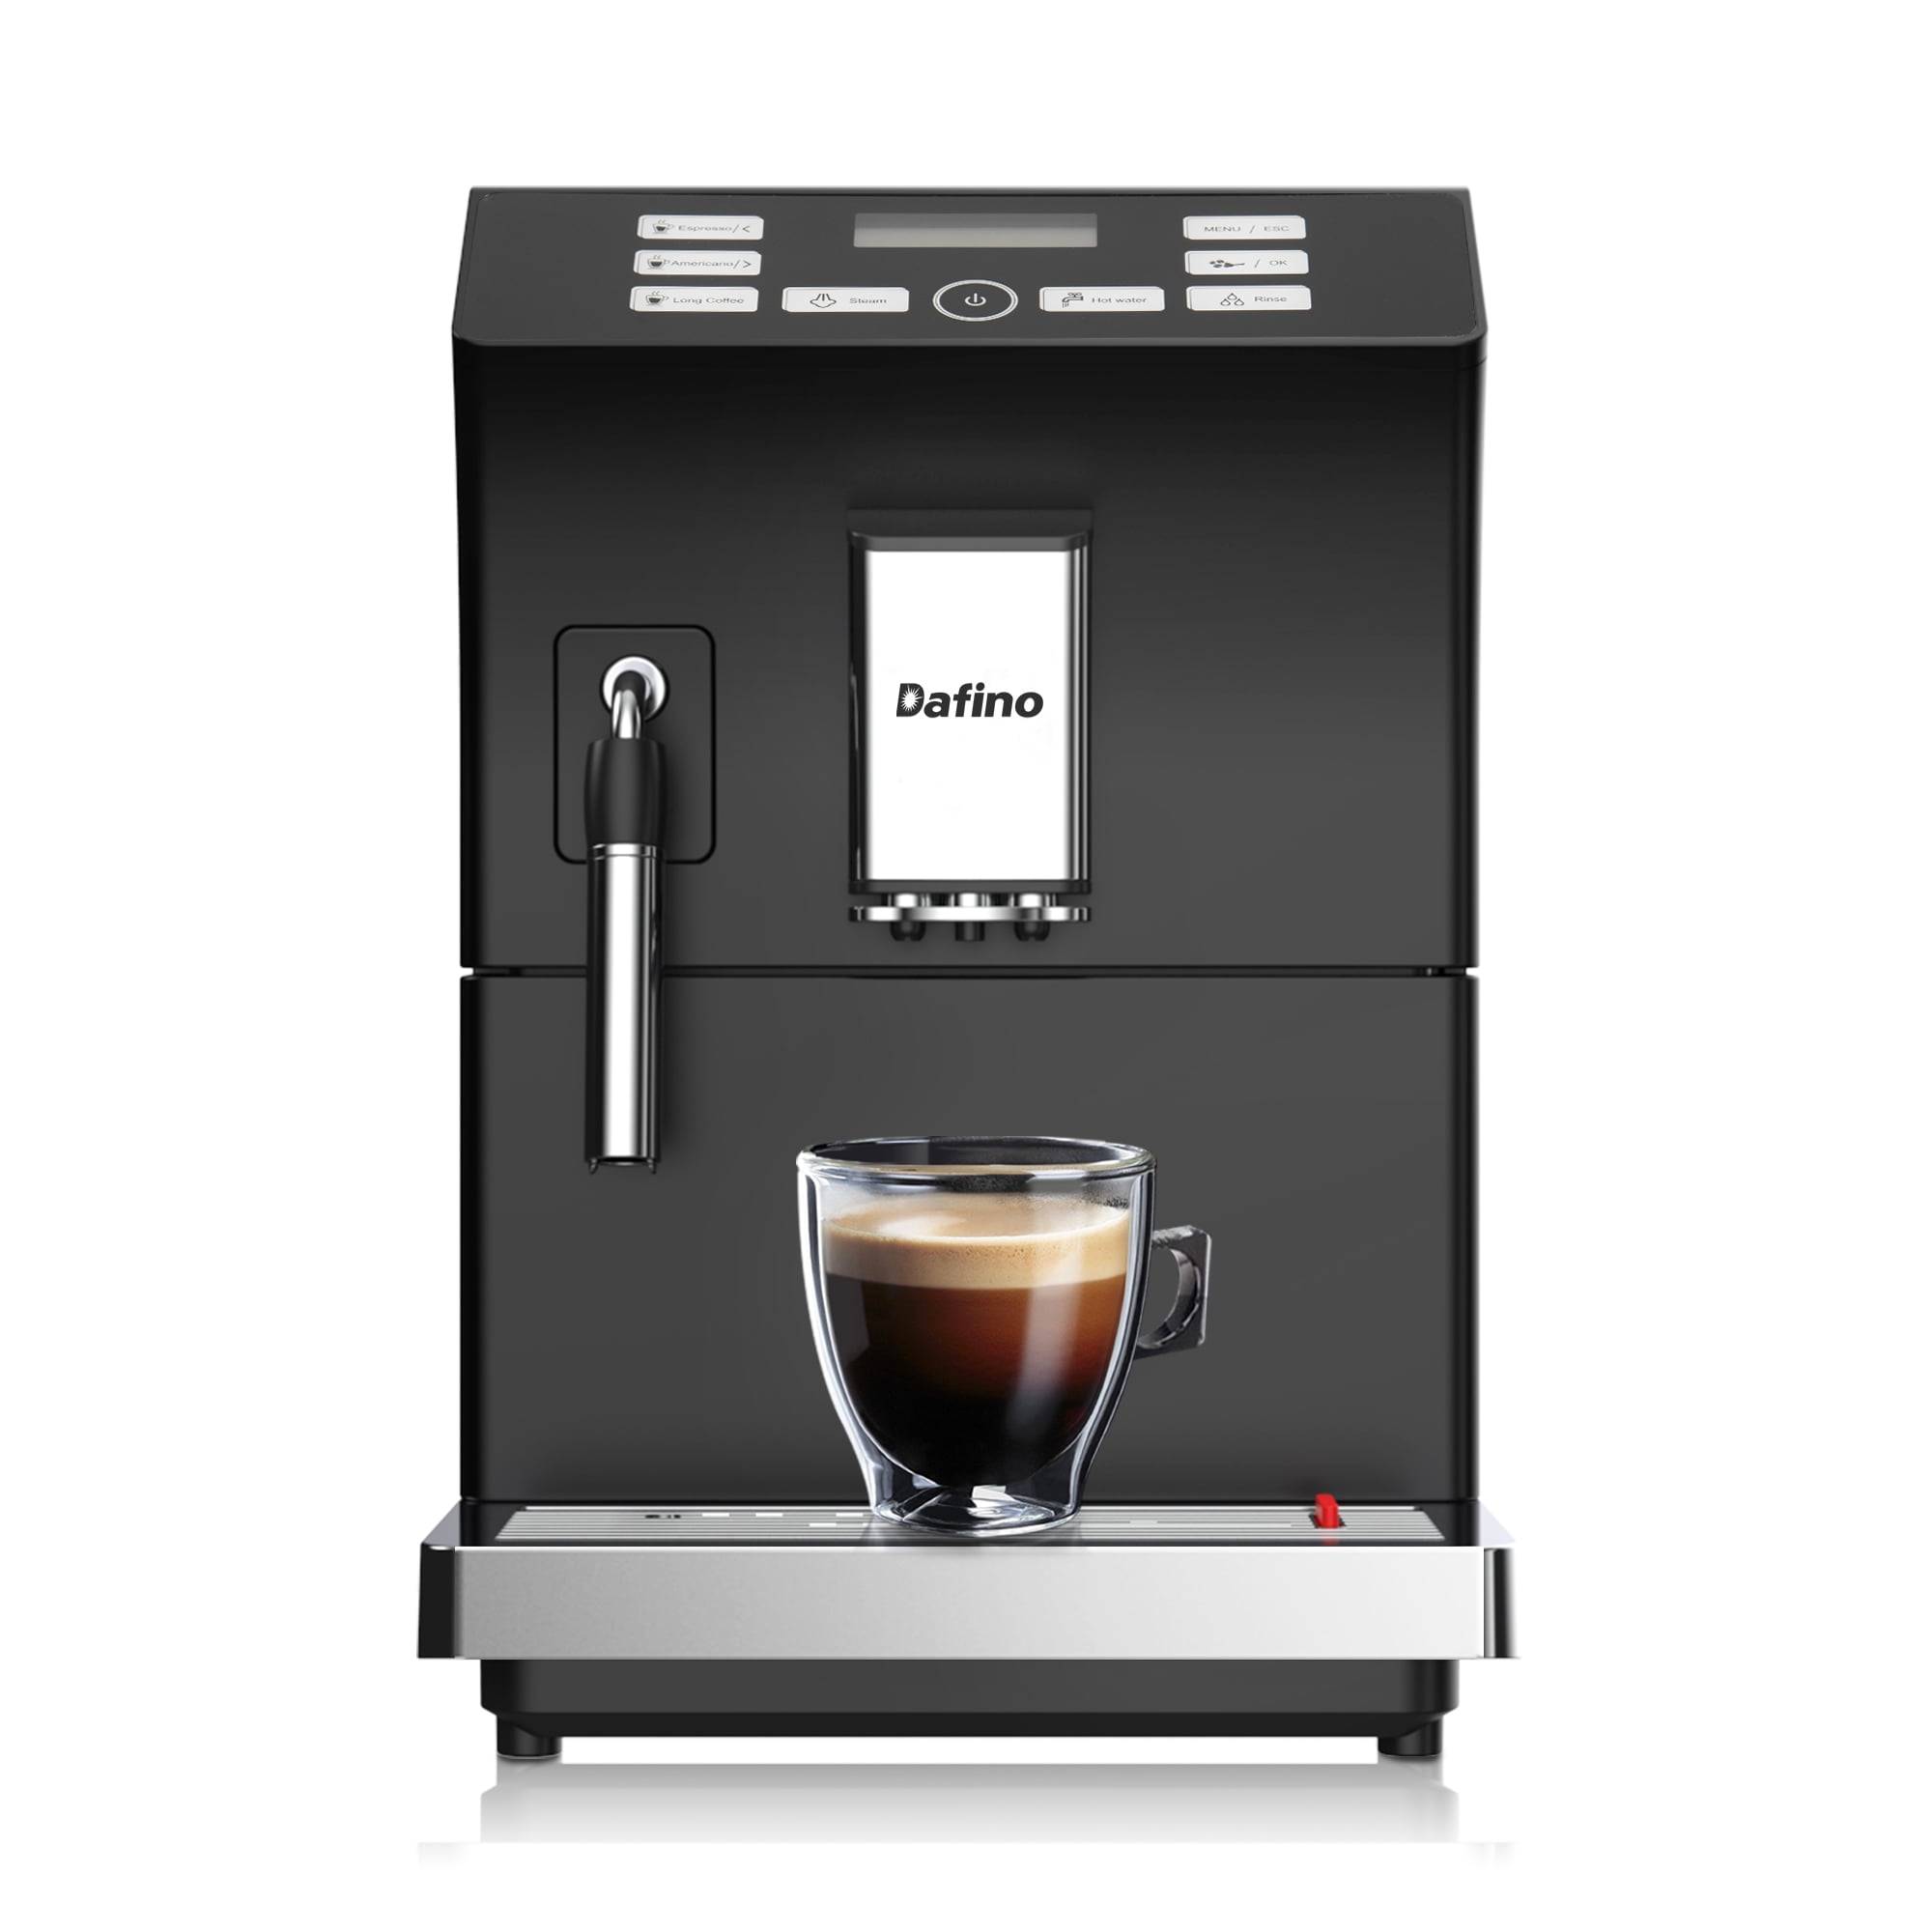 New Philips 2200 LatteGo Fully Automatic Espresso Machine, Black - EP2230/14